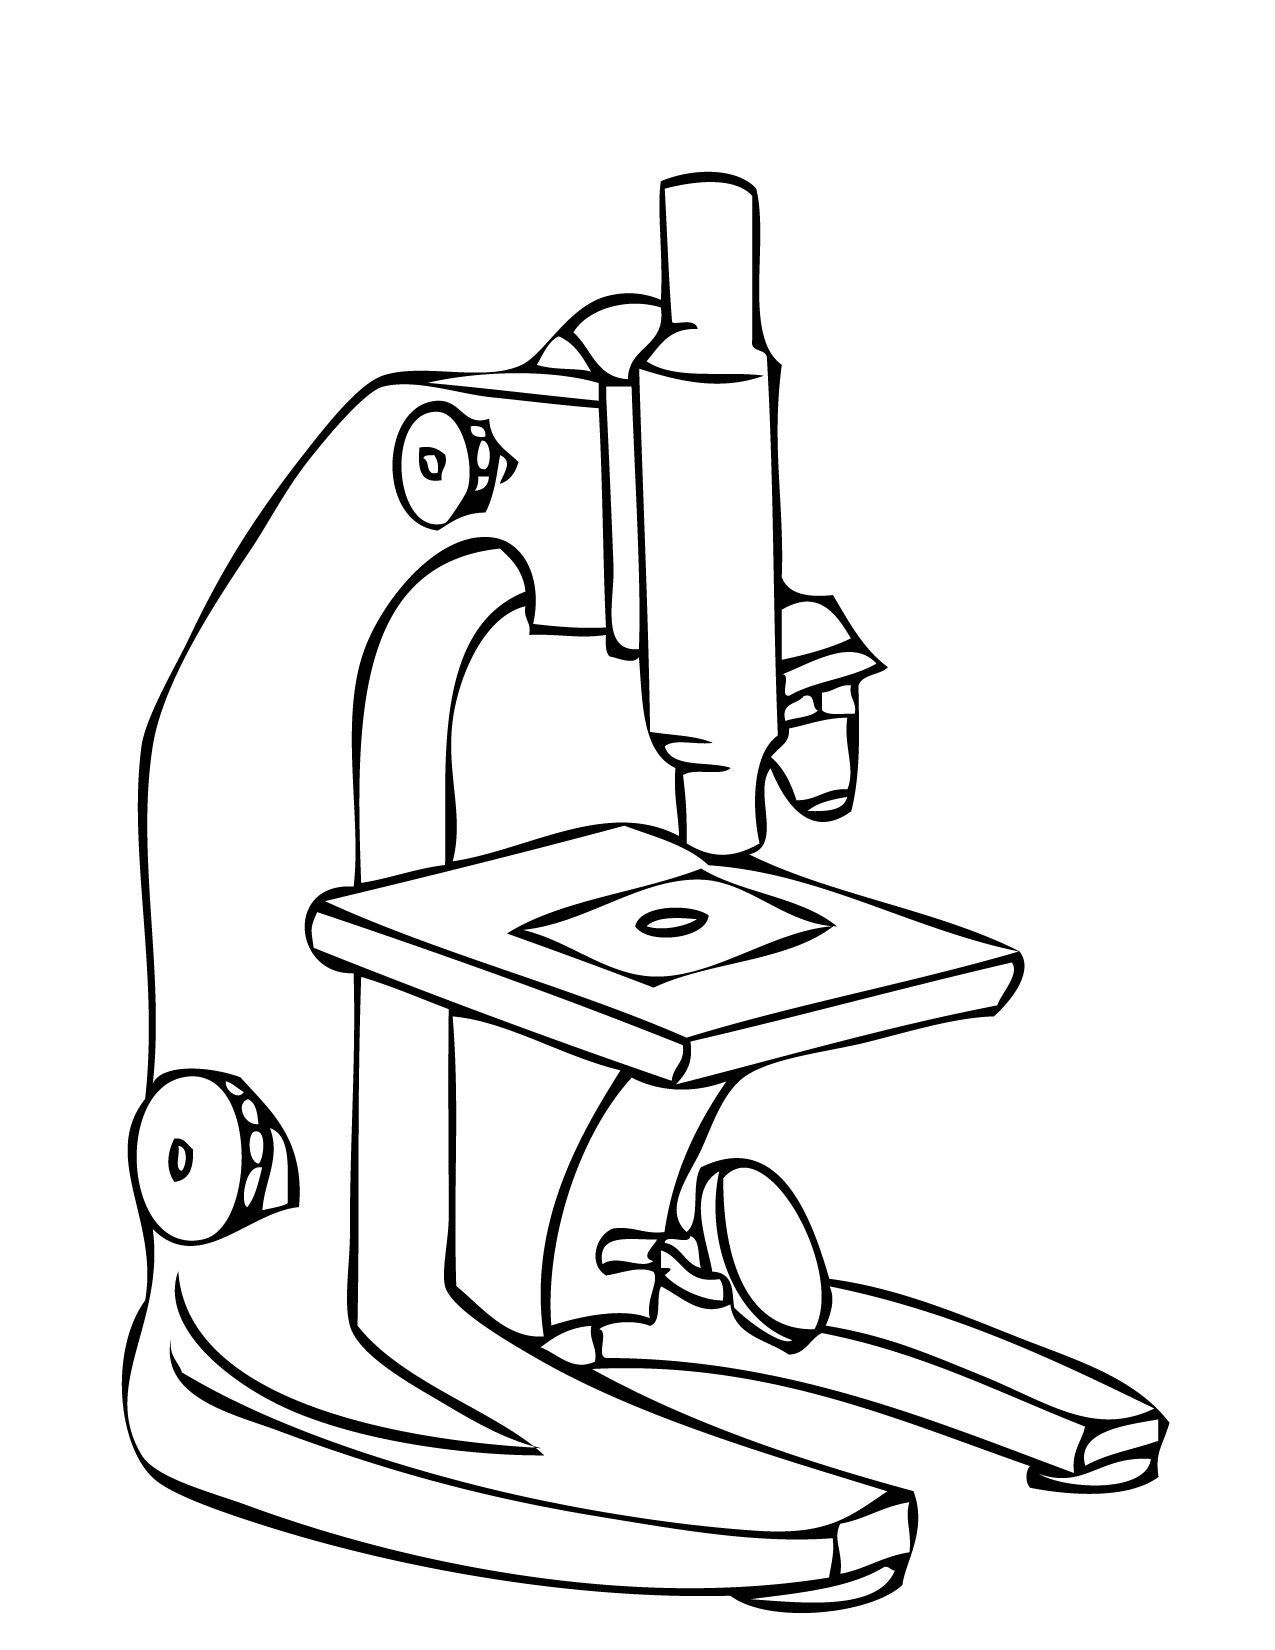 Simple microscope clipart clipartfest 3